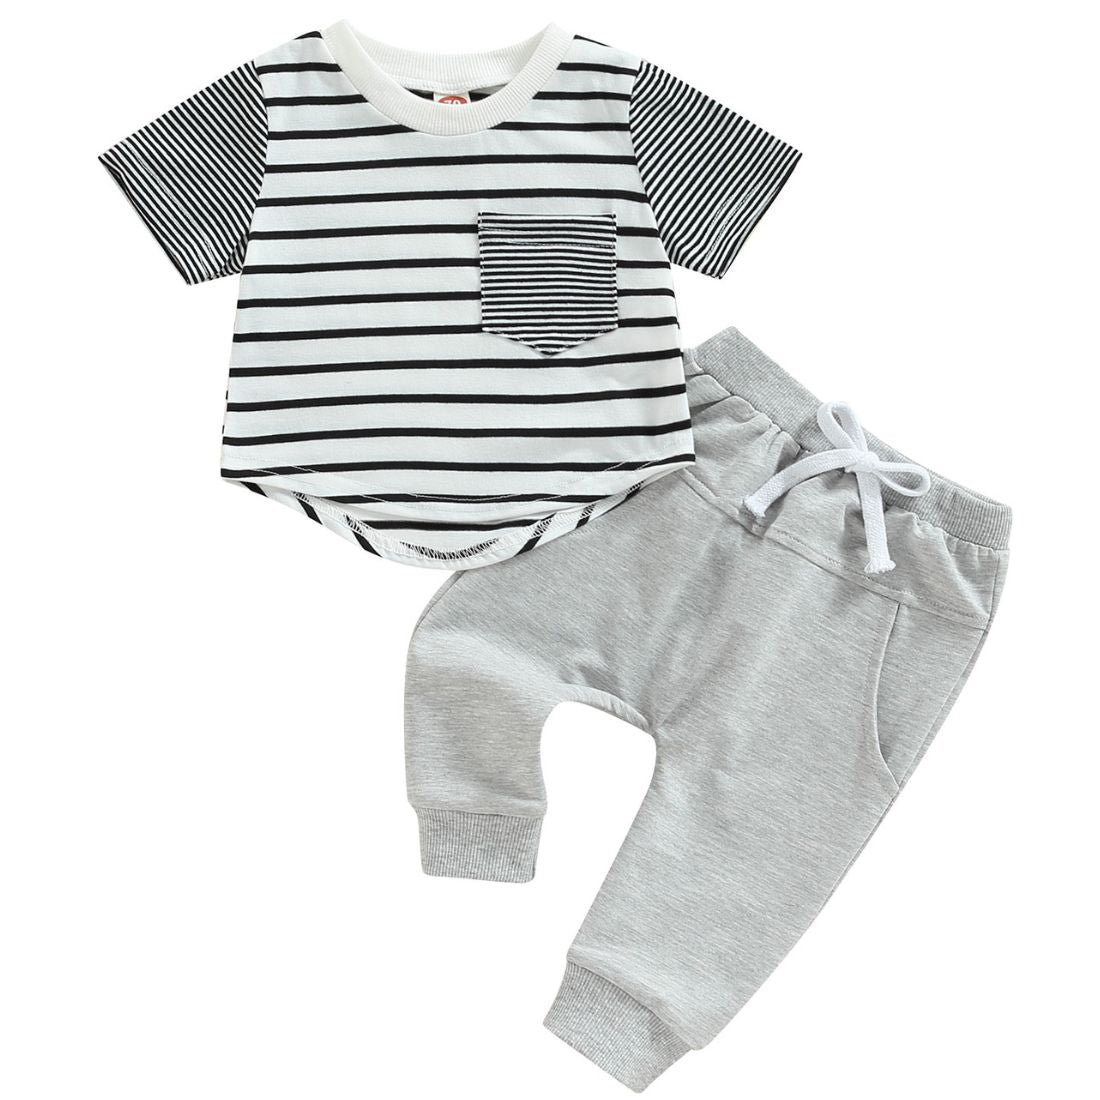 Striped Tee Baby Boy Clothing Set